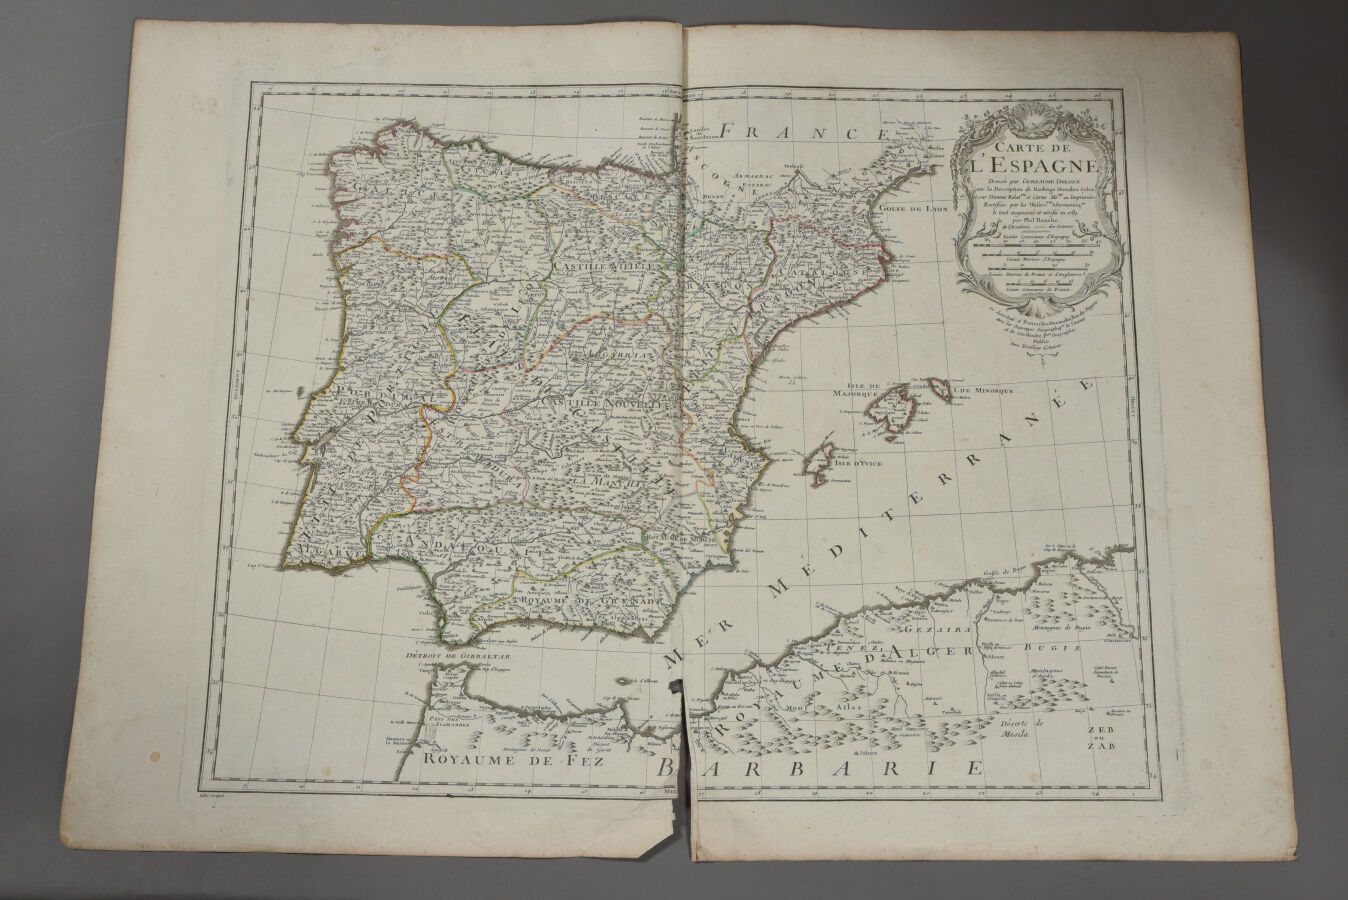 Null GUILLAUME DELISLE & DEZAUCHE his successor
(France, 18th century)
Map of Sp&hellip;